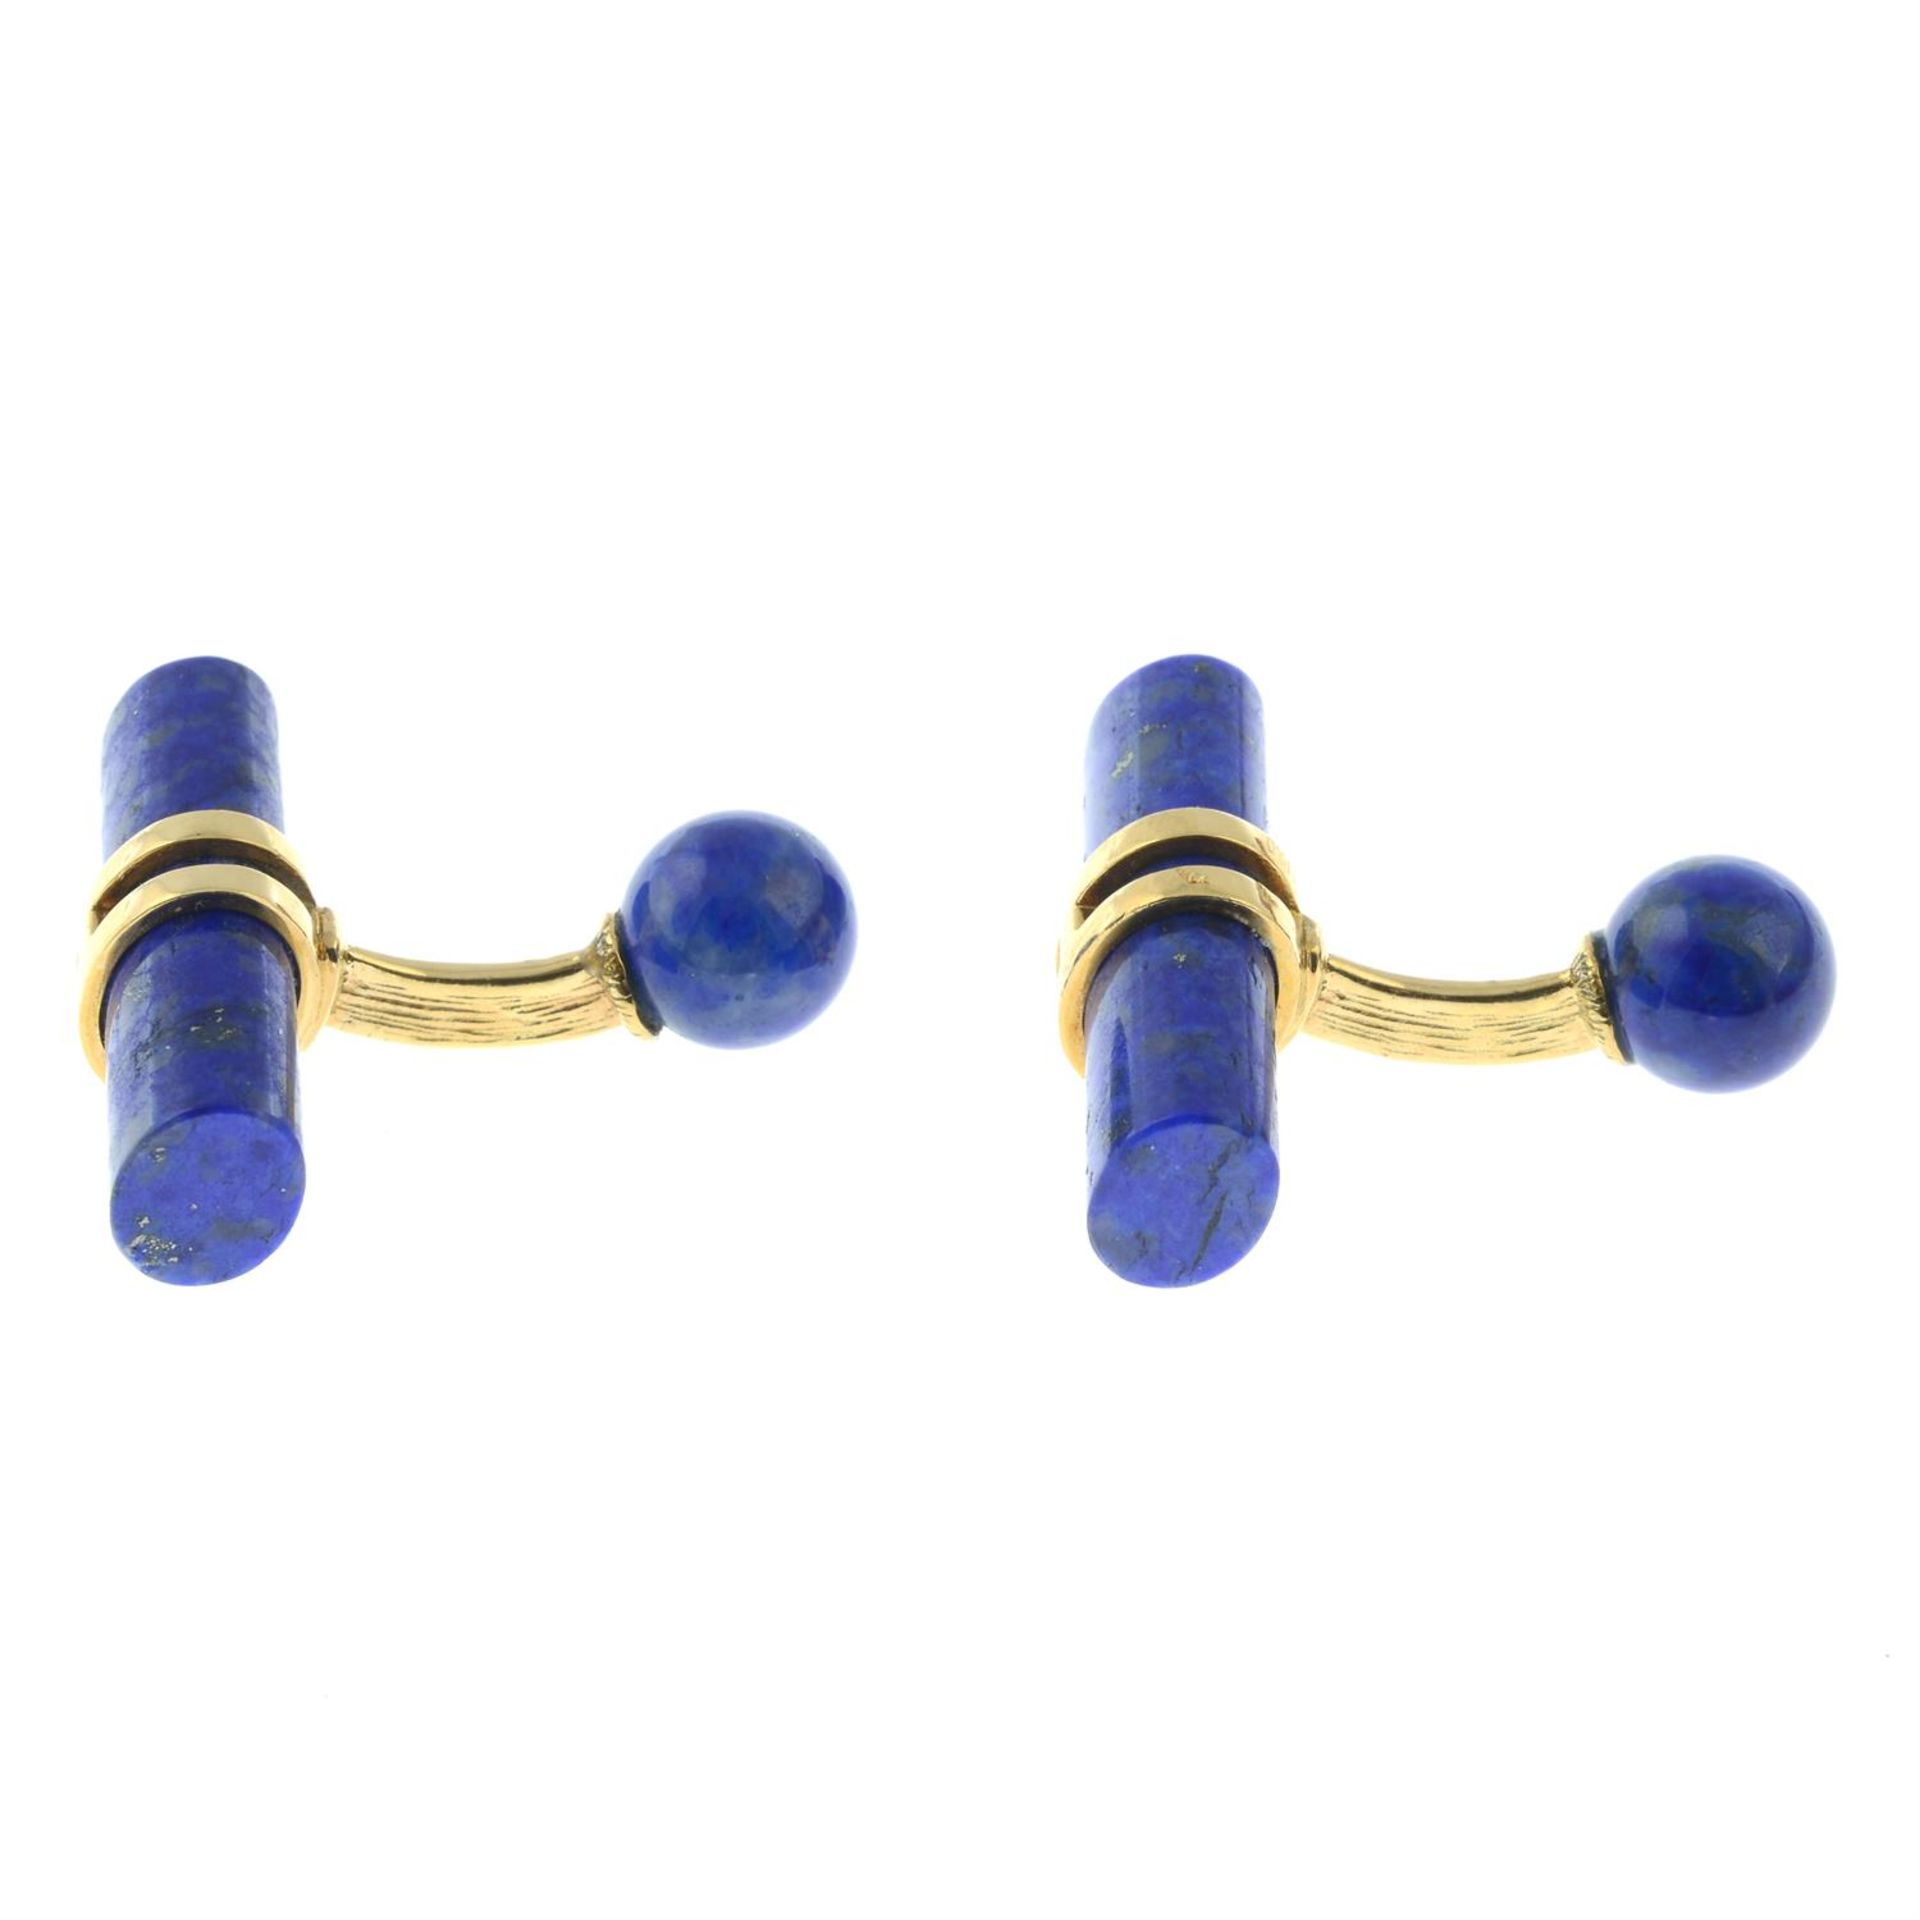 A pair of lapis lazuli cufflinks, by Hermès. - Image 3 of 4